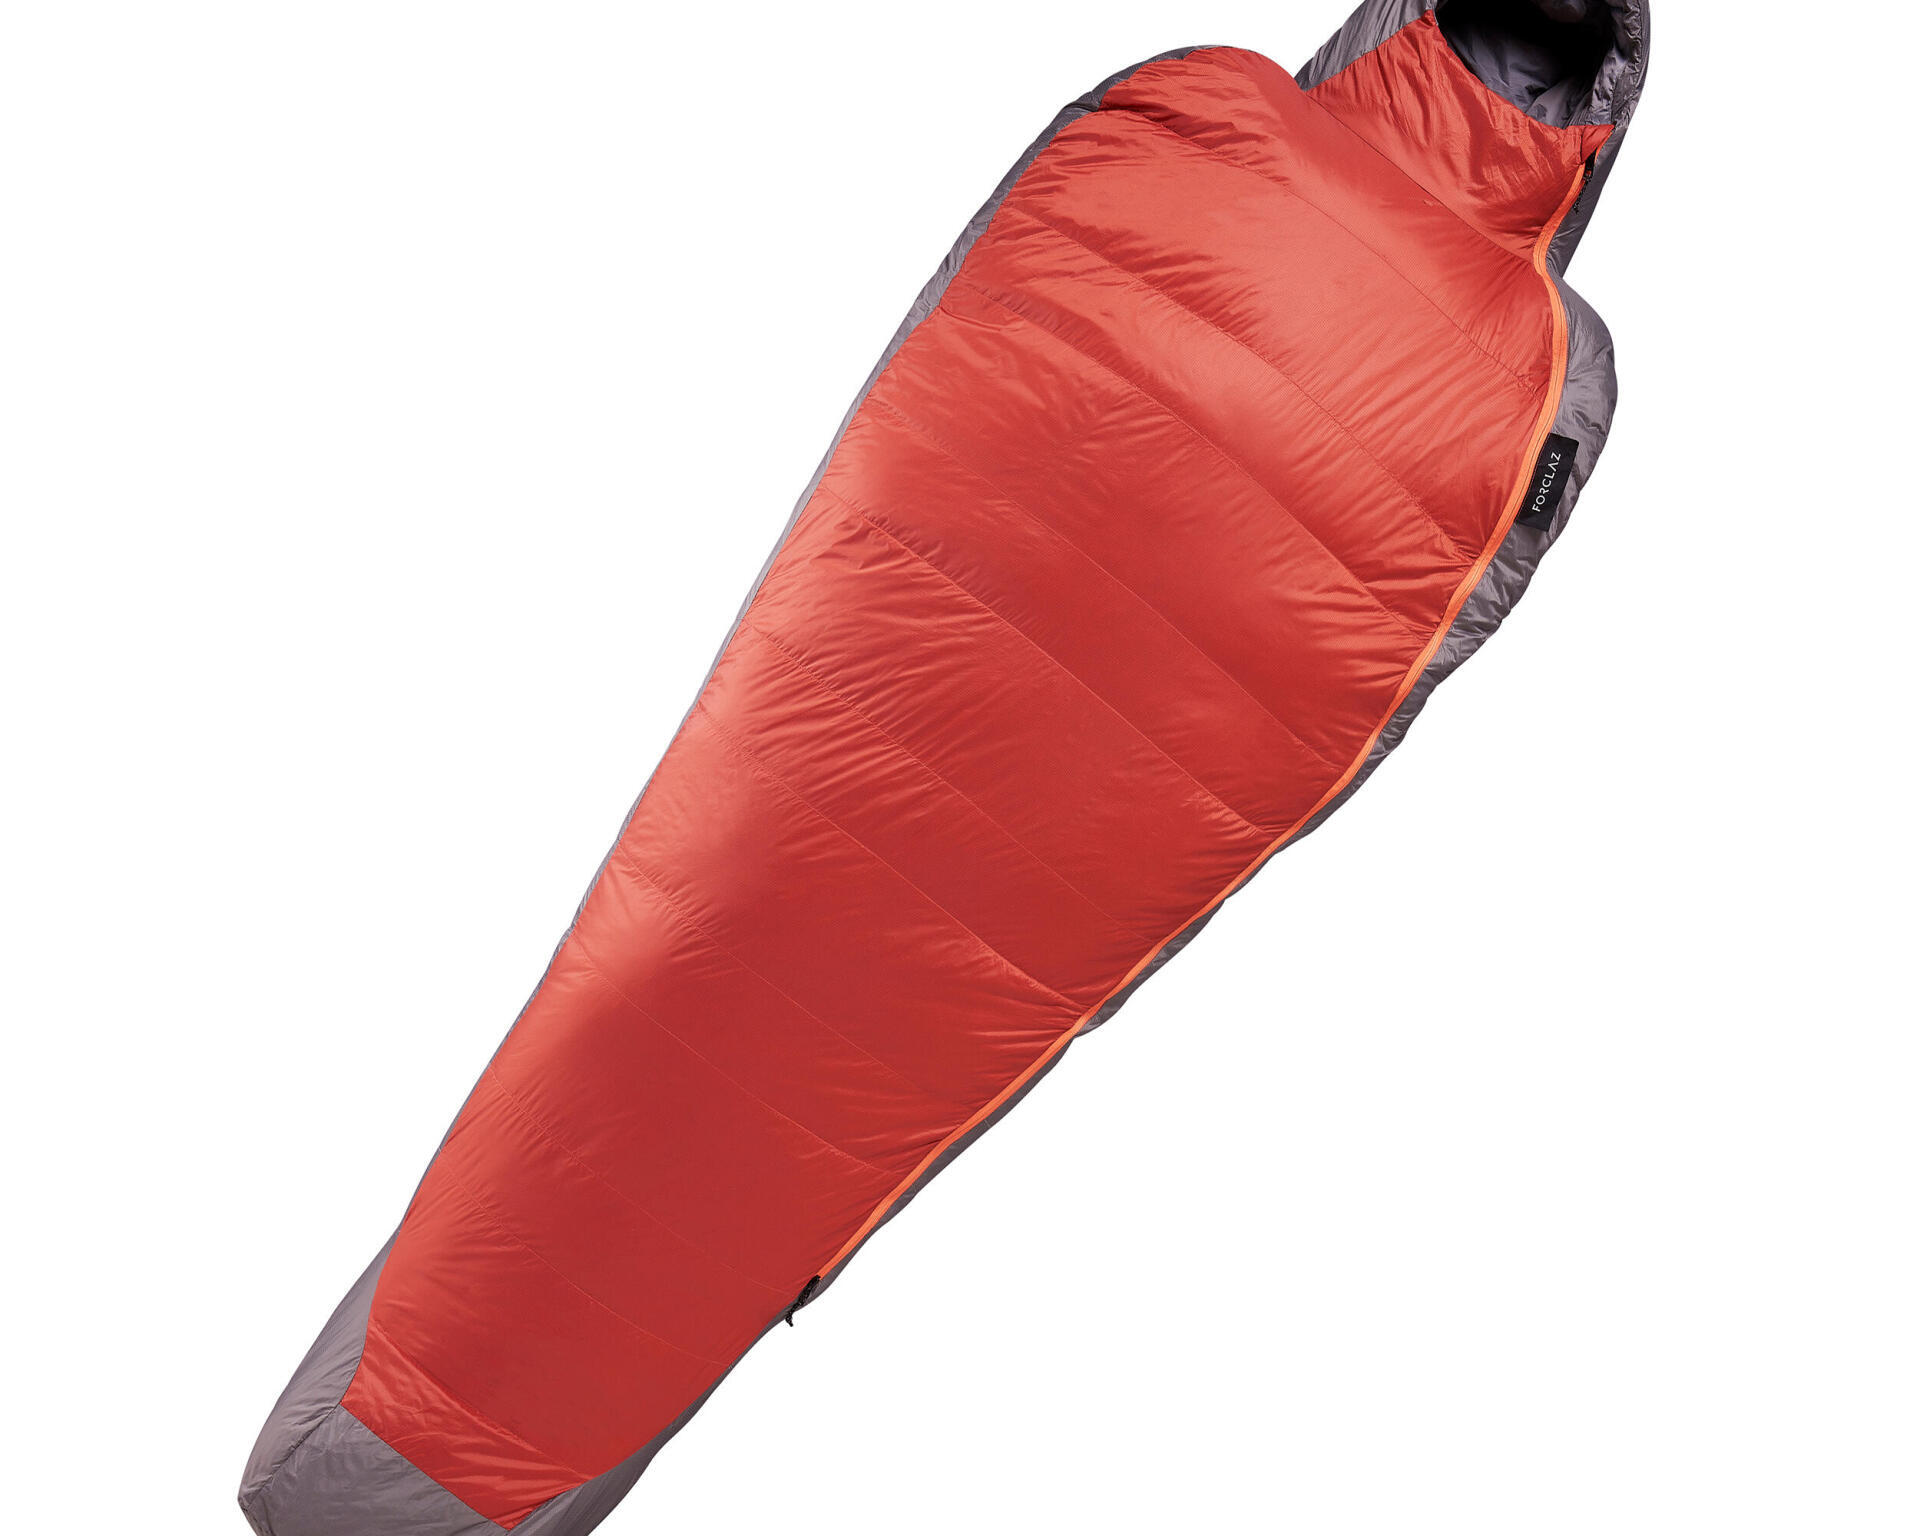 Hot/cold trekking sleeping bag